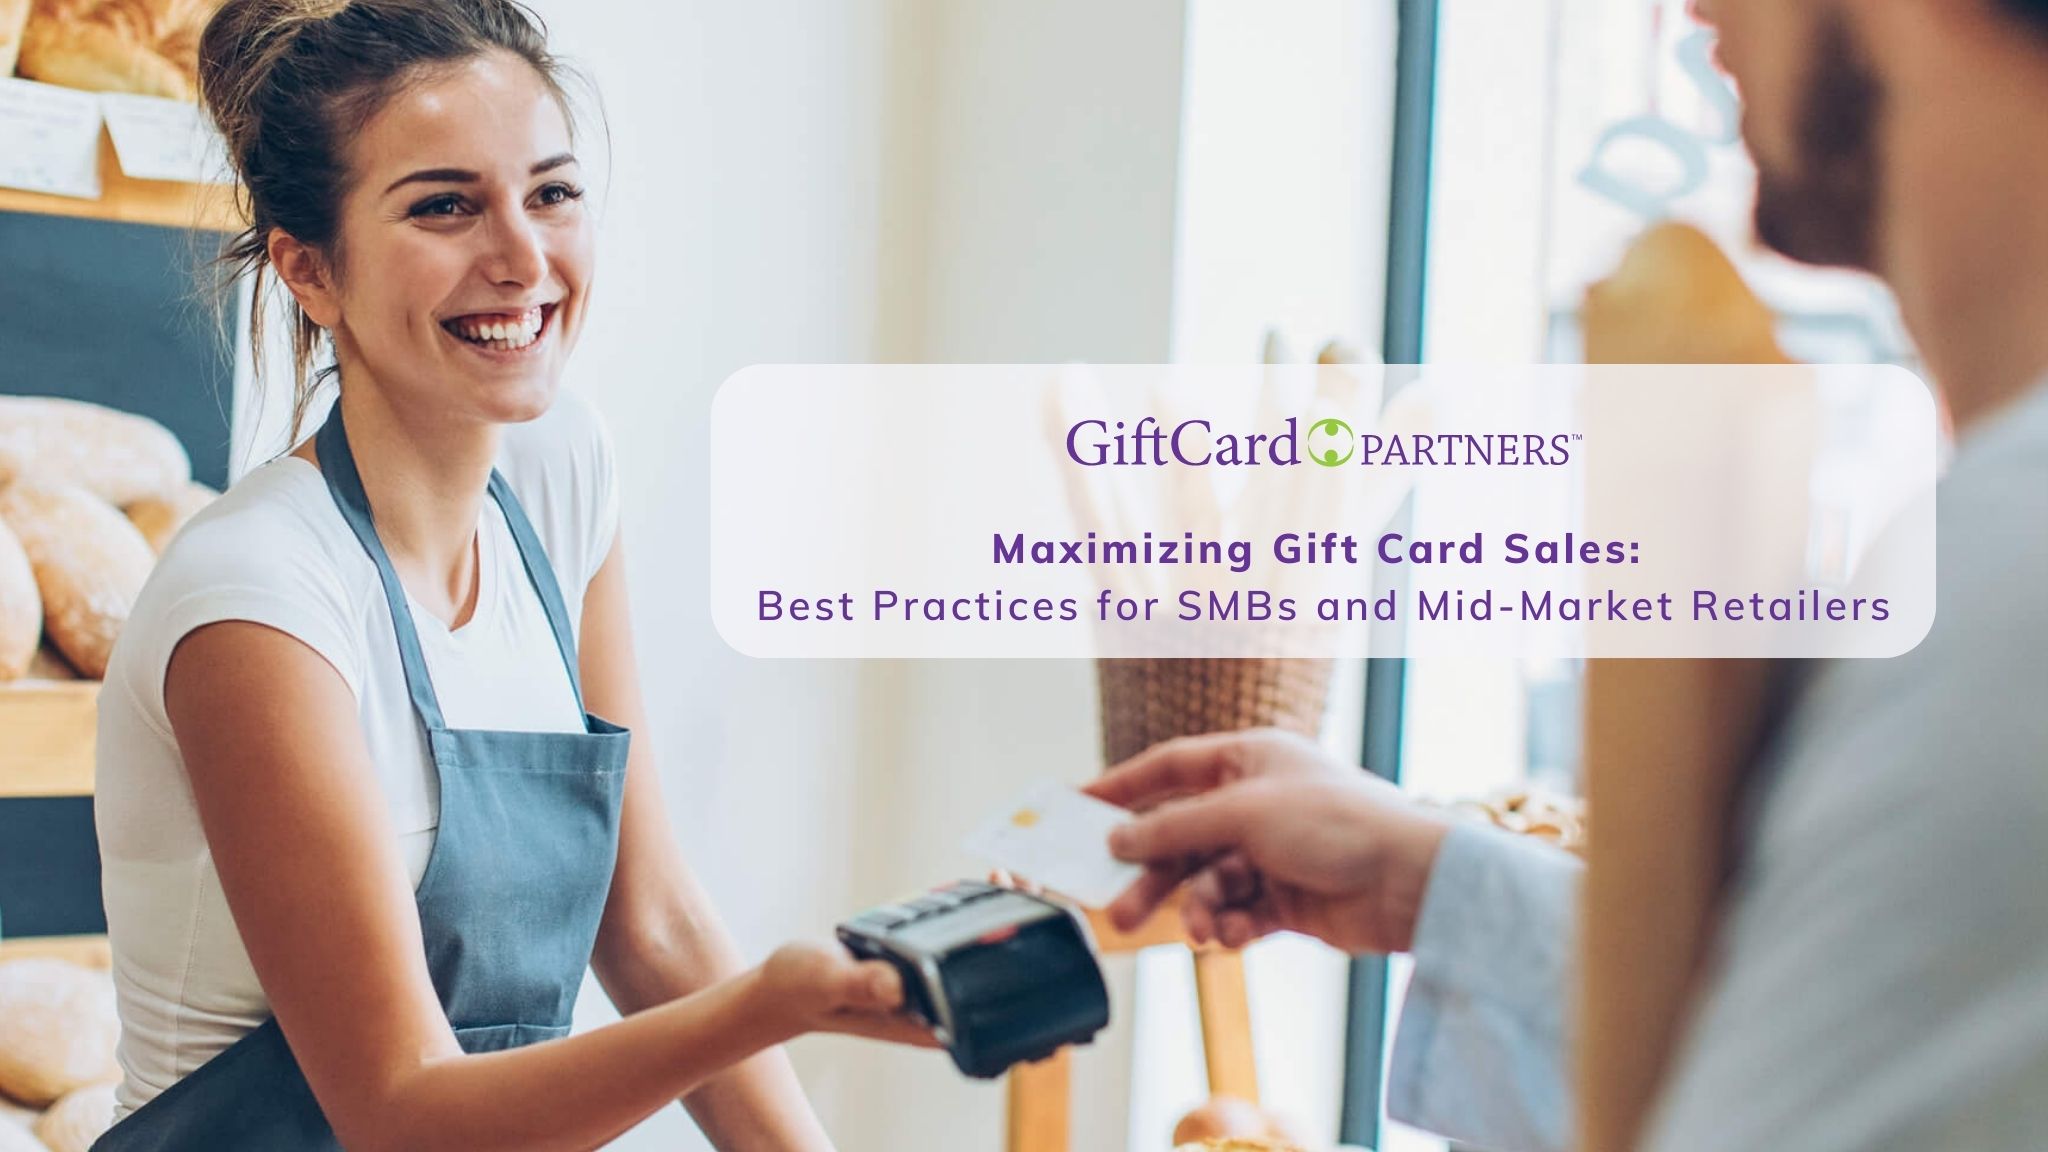 Smiling retailer handing payment reader to satisfied customer